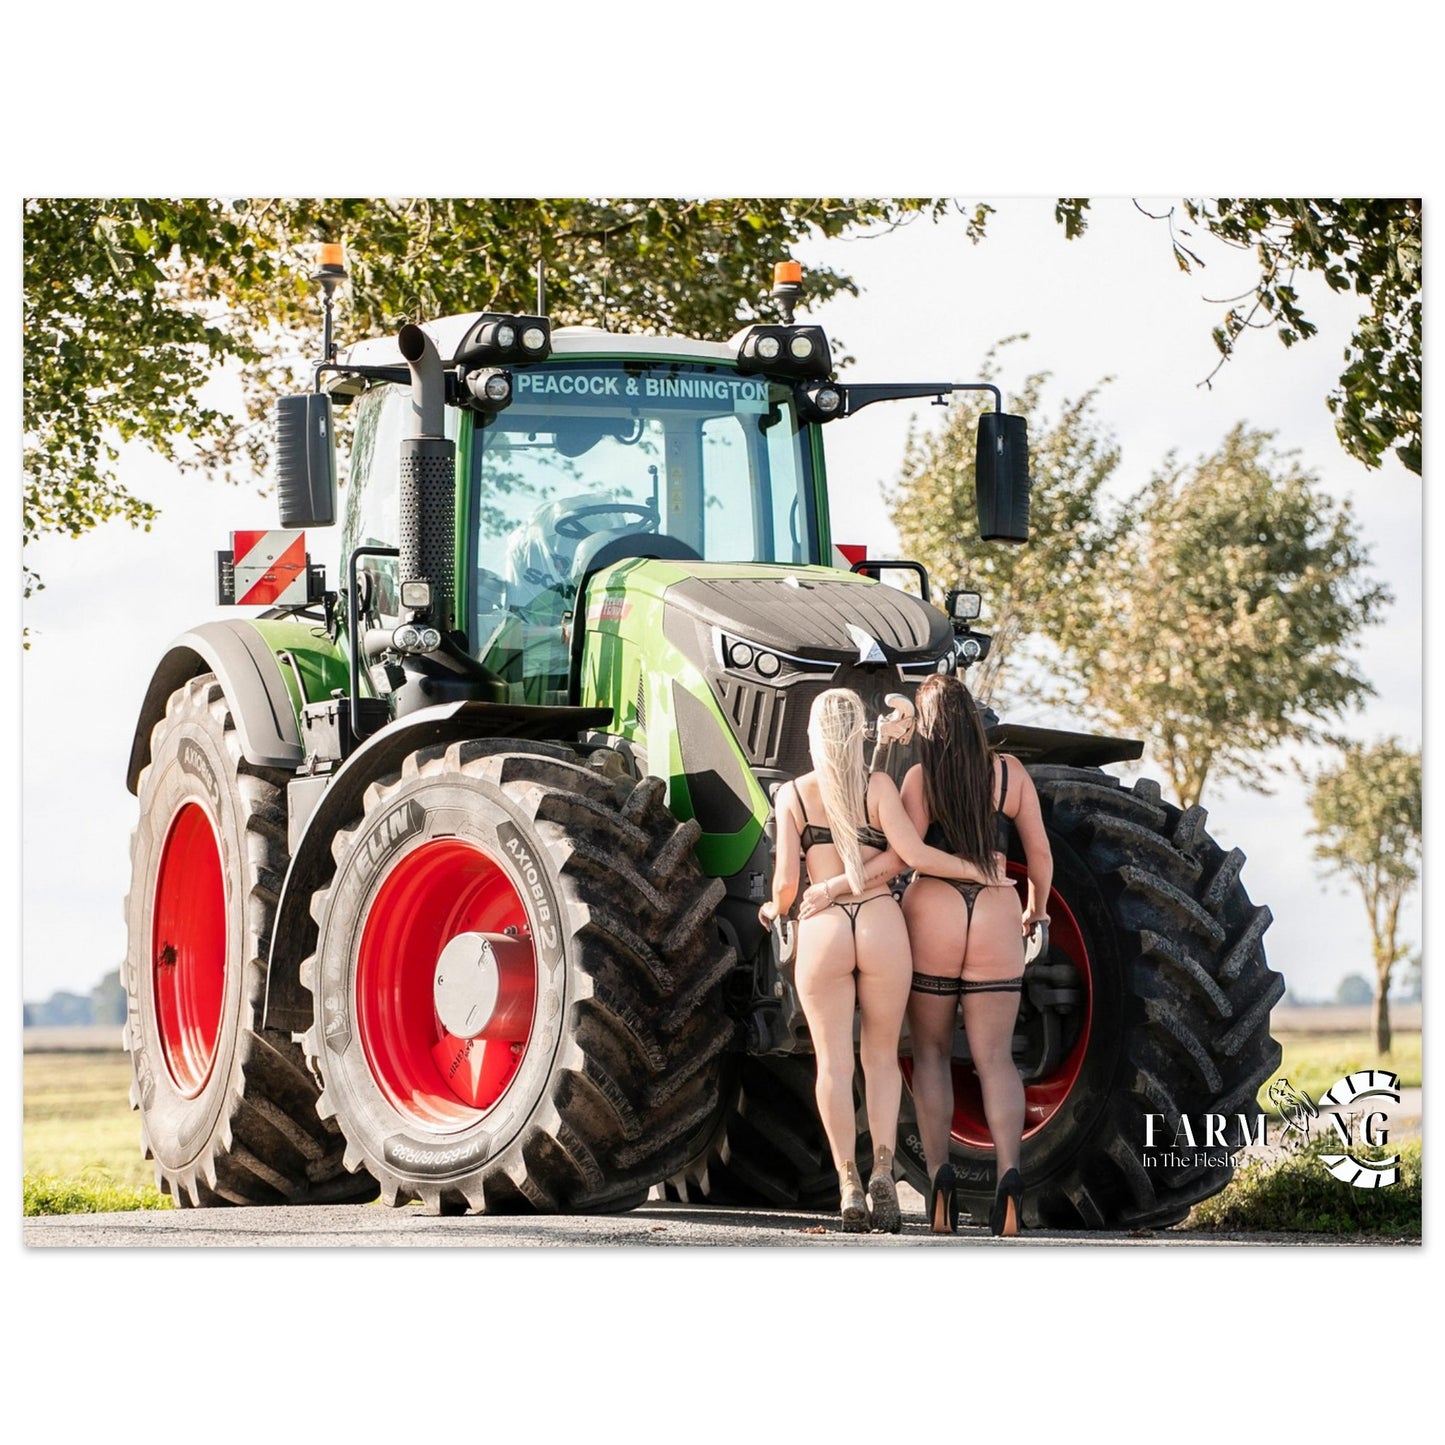 Farming In The Flesh X TruckerGirl850 Fendt Poster